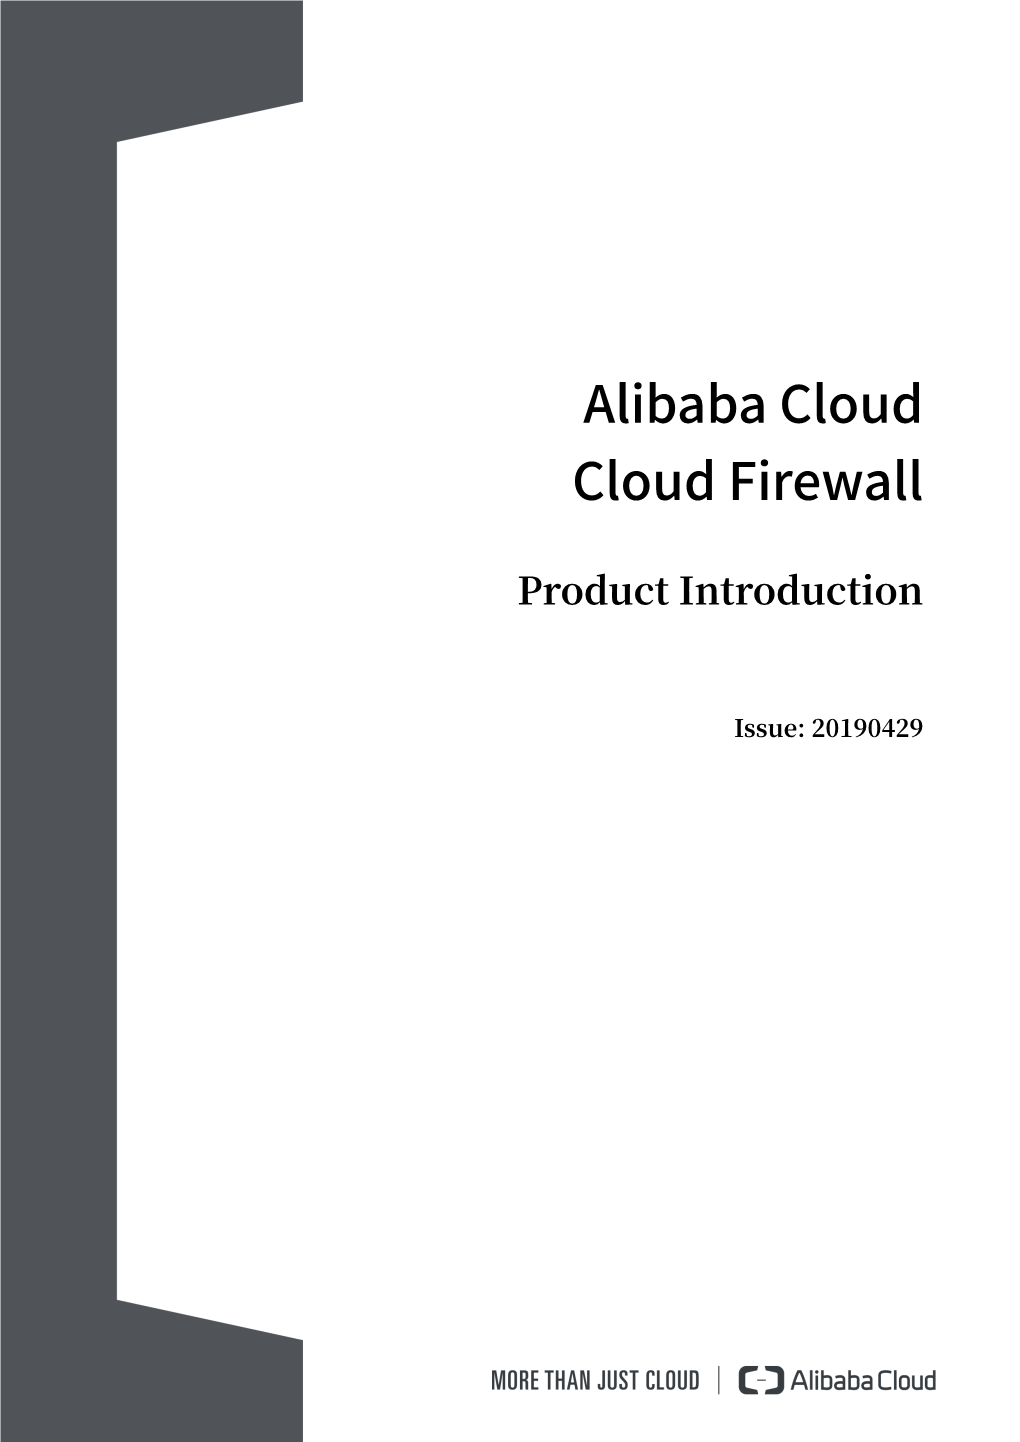 Alibaba Cloud Cloud Firewall